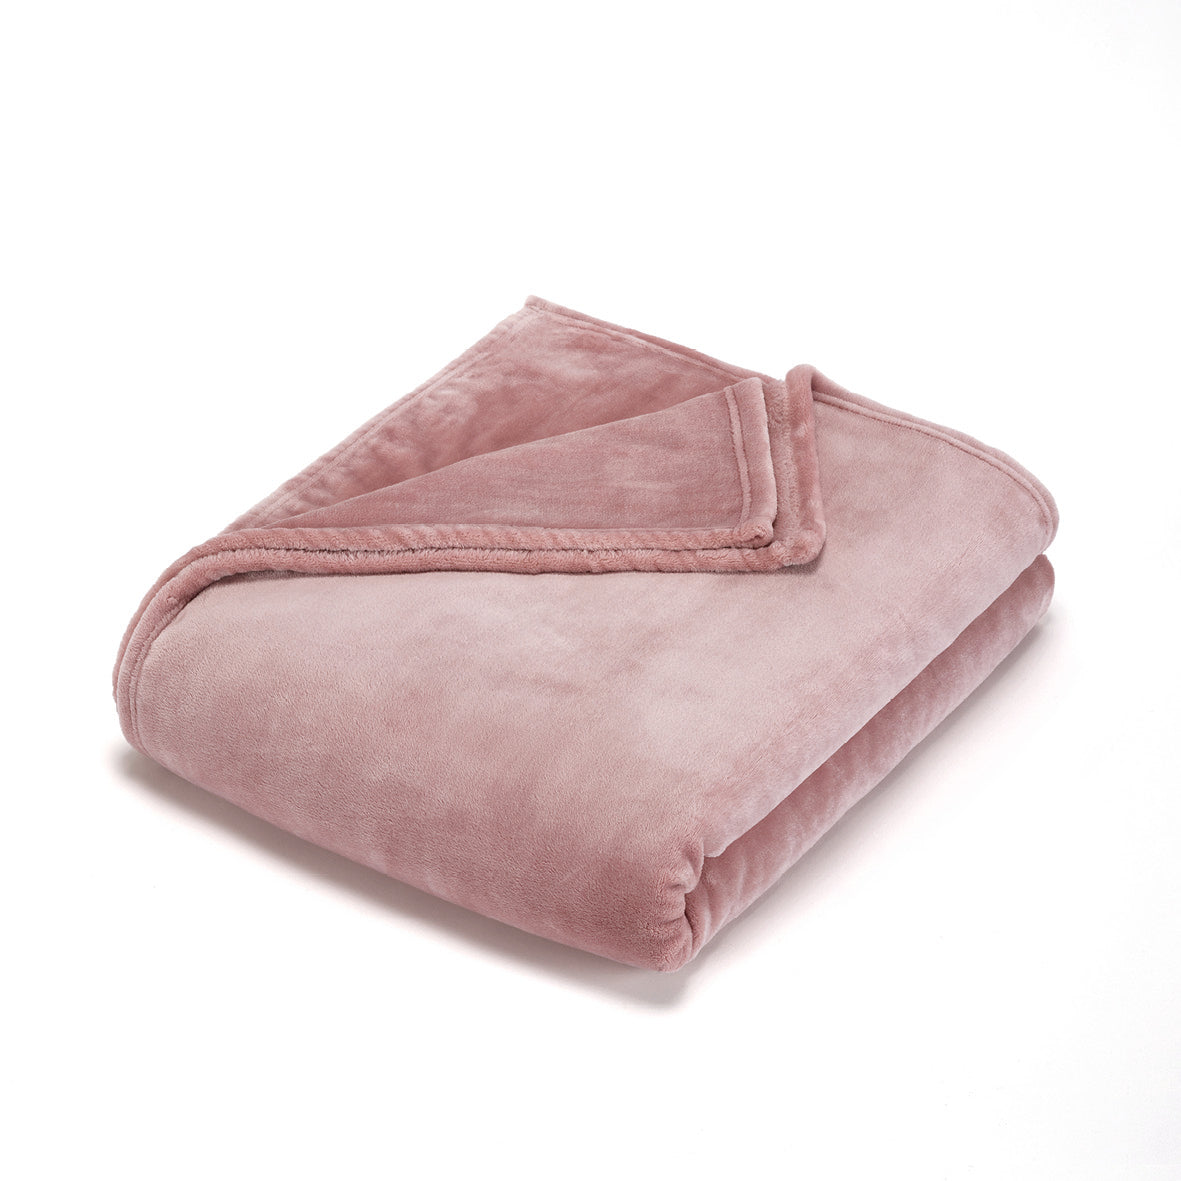 Vipshopboutic plaid pink – Fleece Light